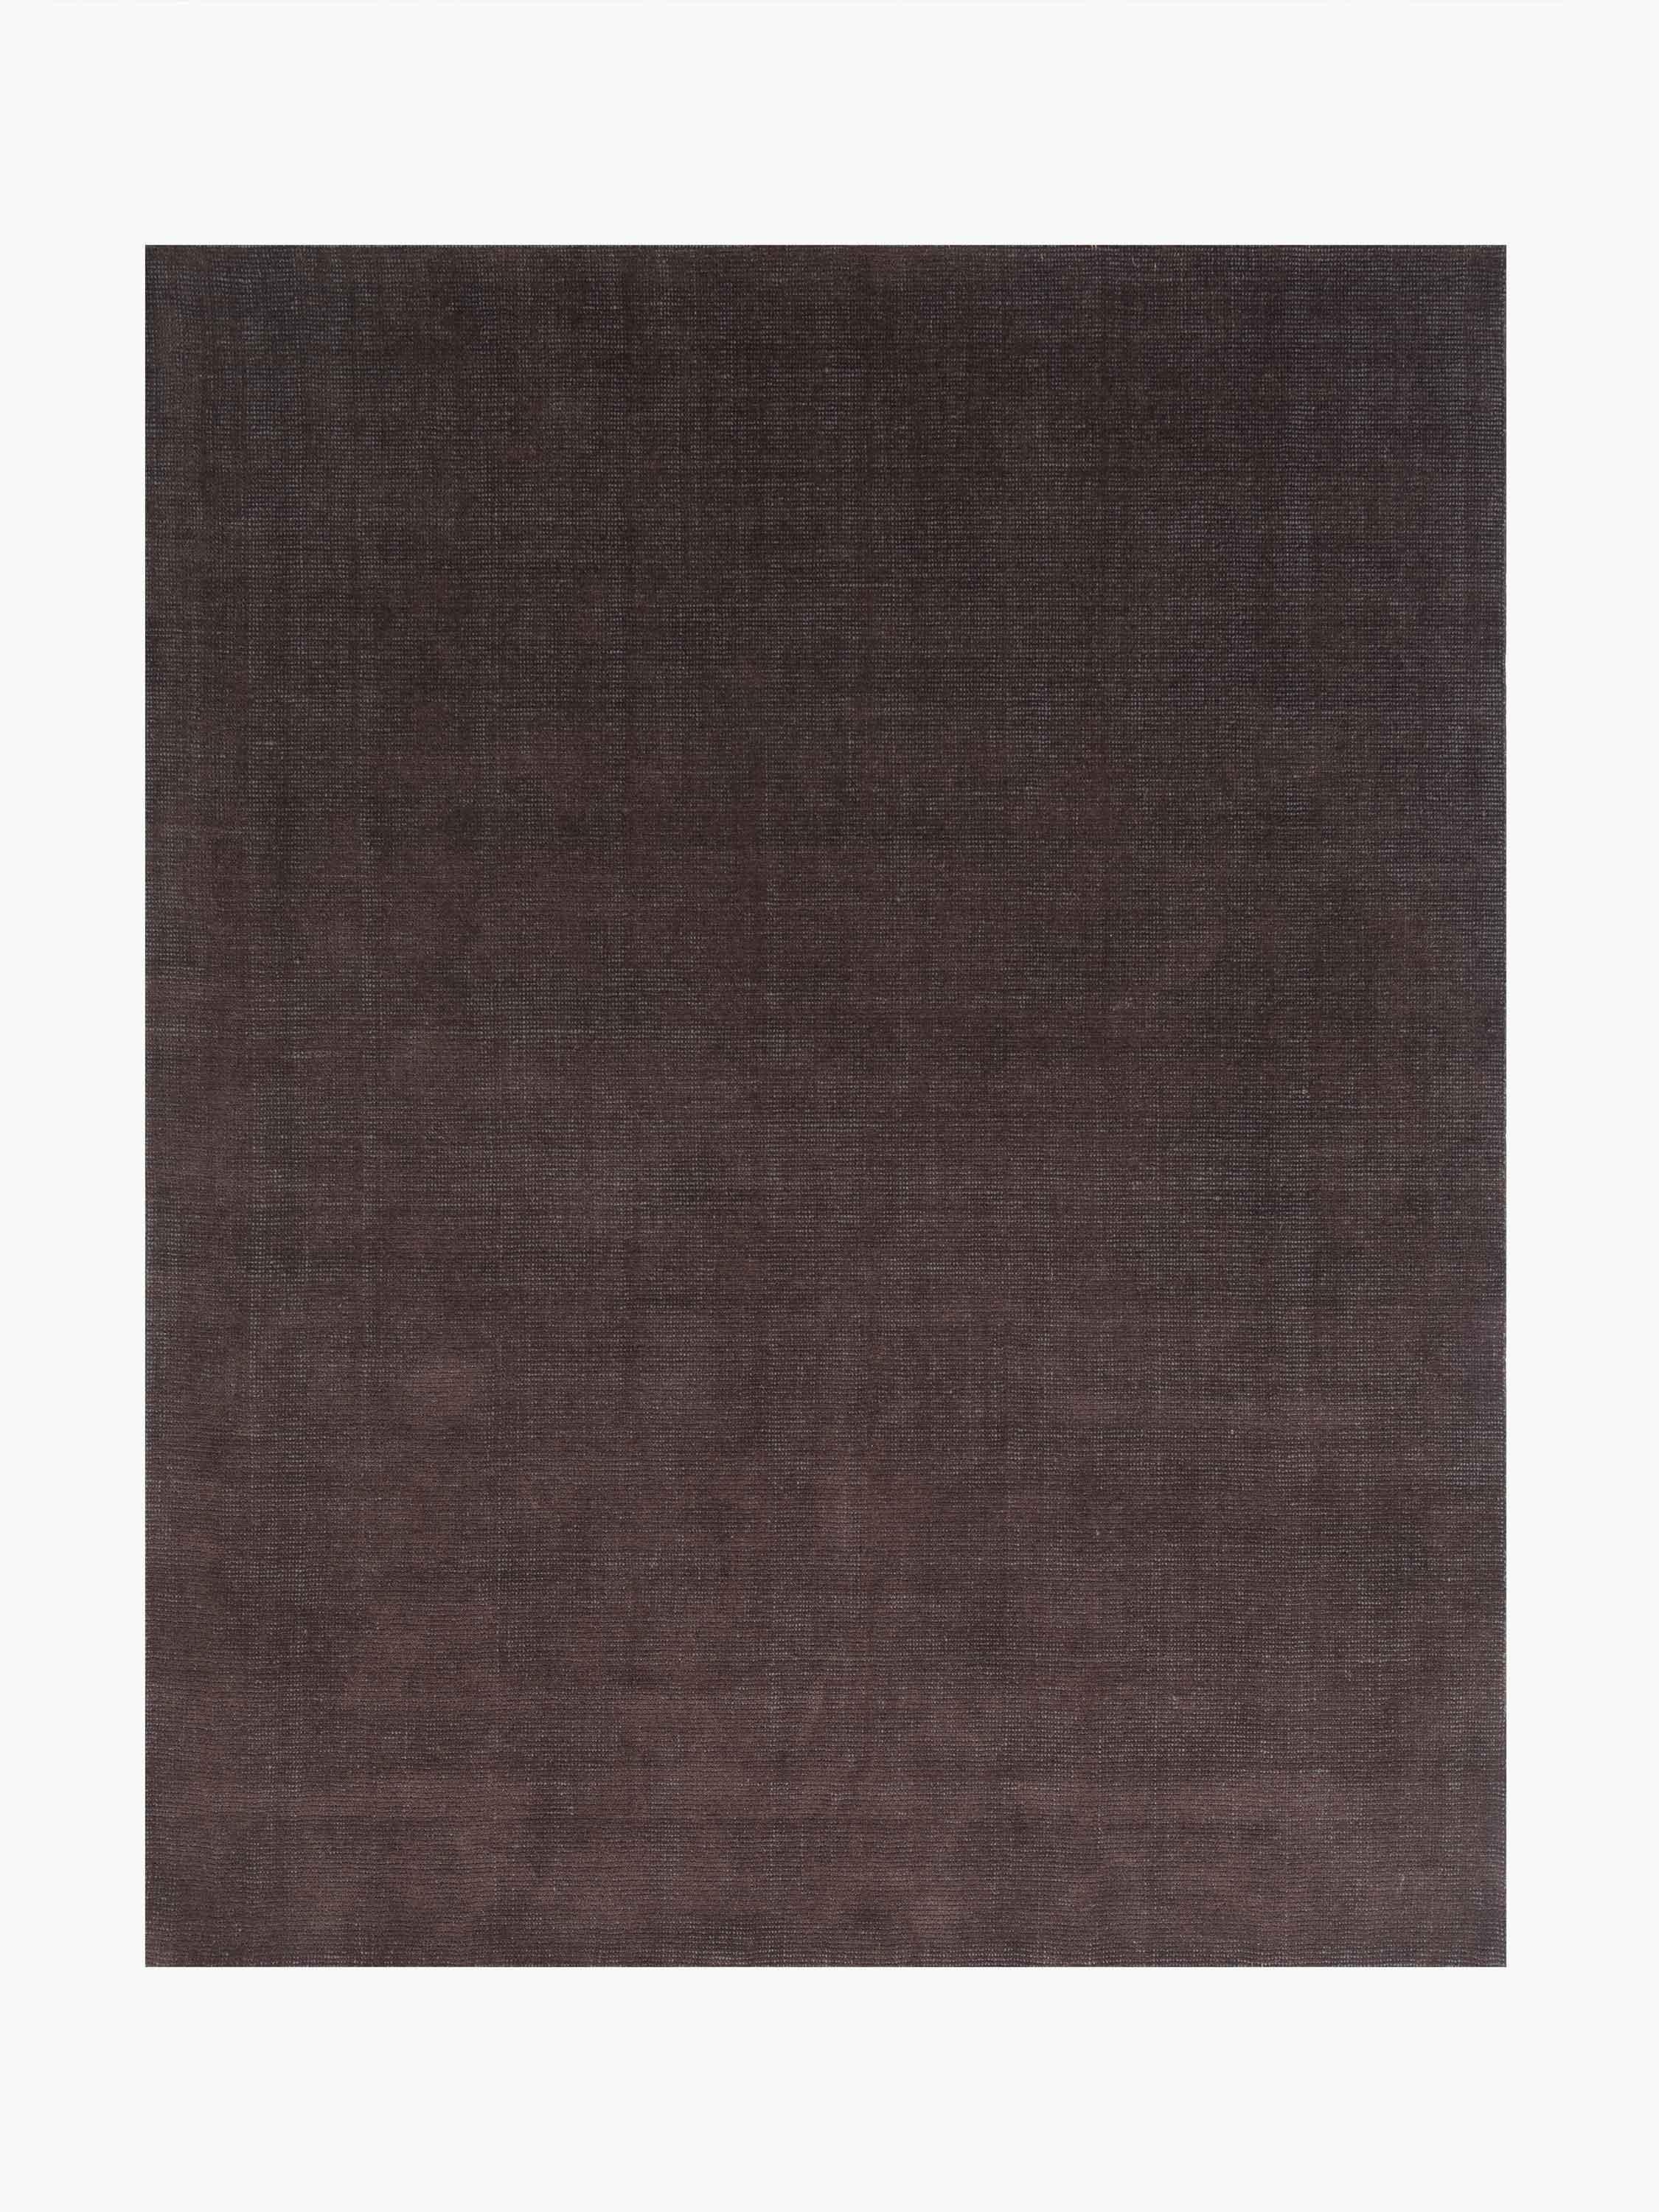 For Sale: Brown (Distressed Wool Espresso) Ben Soleimani Distressed Wool Rug 6'x9' 4